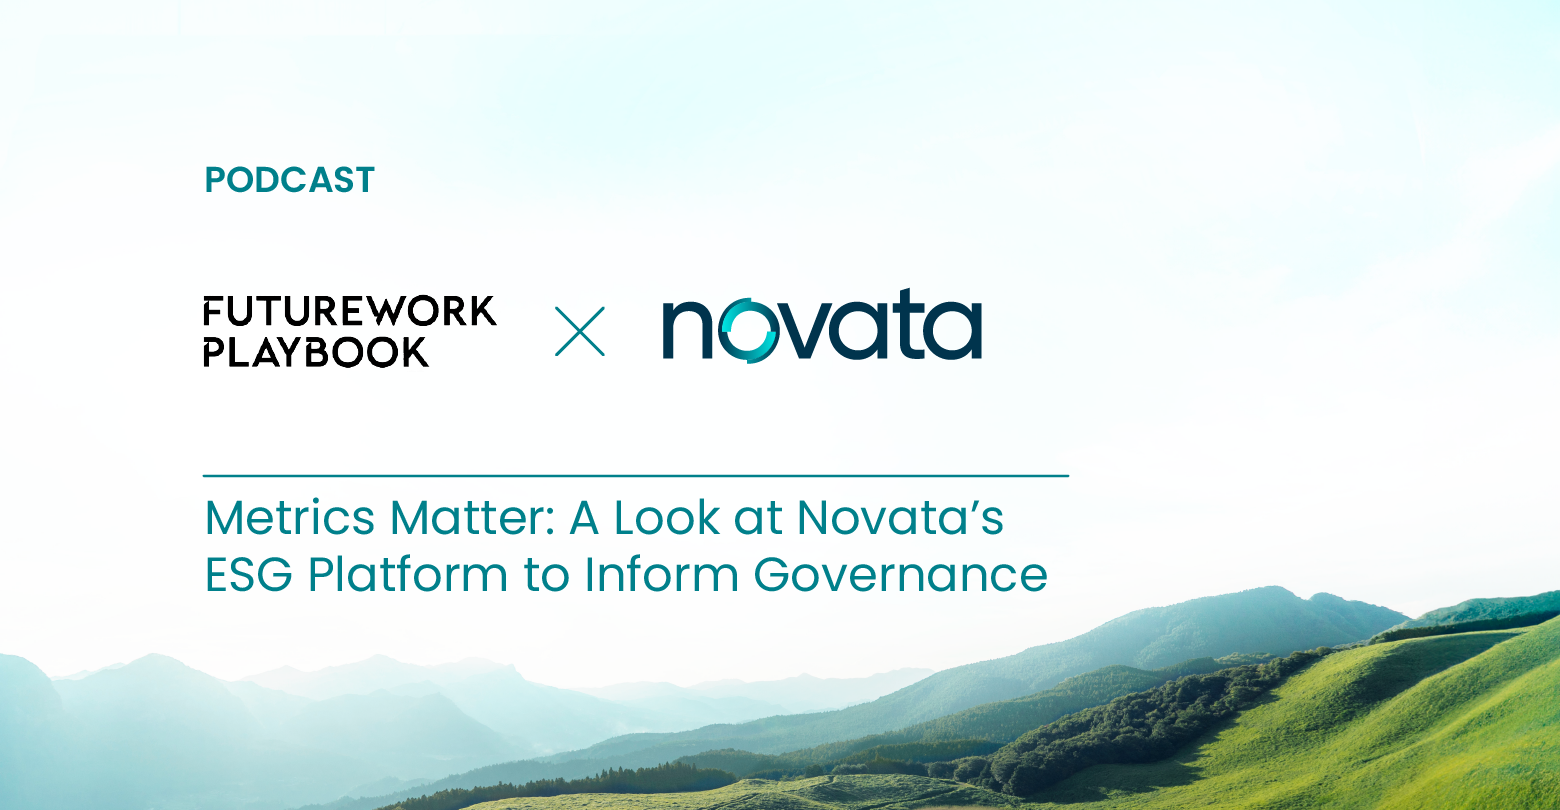 FutureWork Playbook and Novata: Metrics Matter: A Look at Novata's ESG Platform to Inform Governance